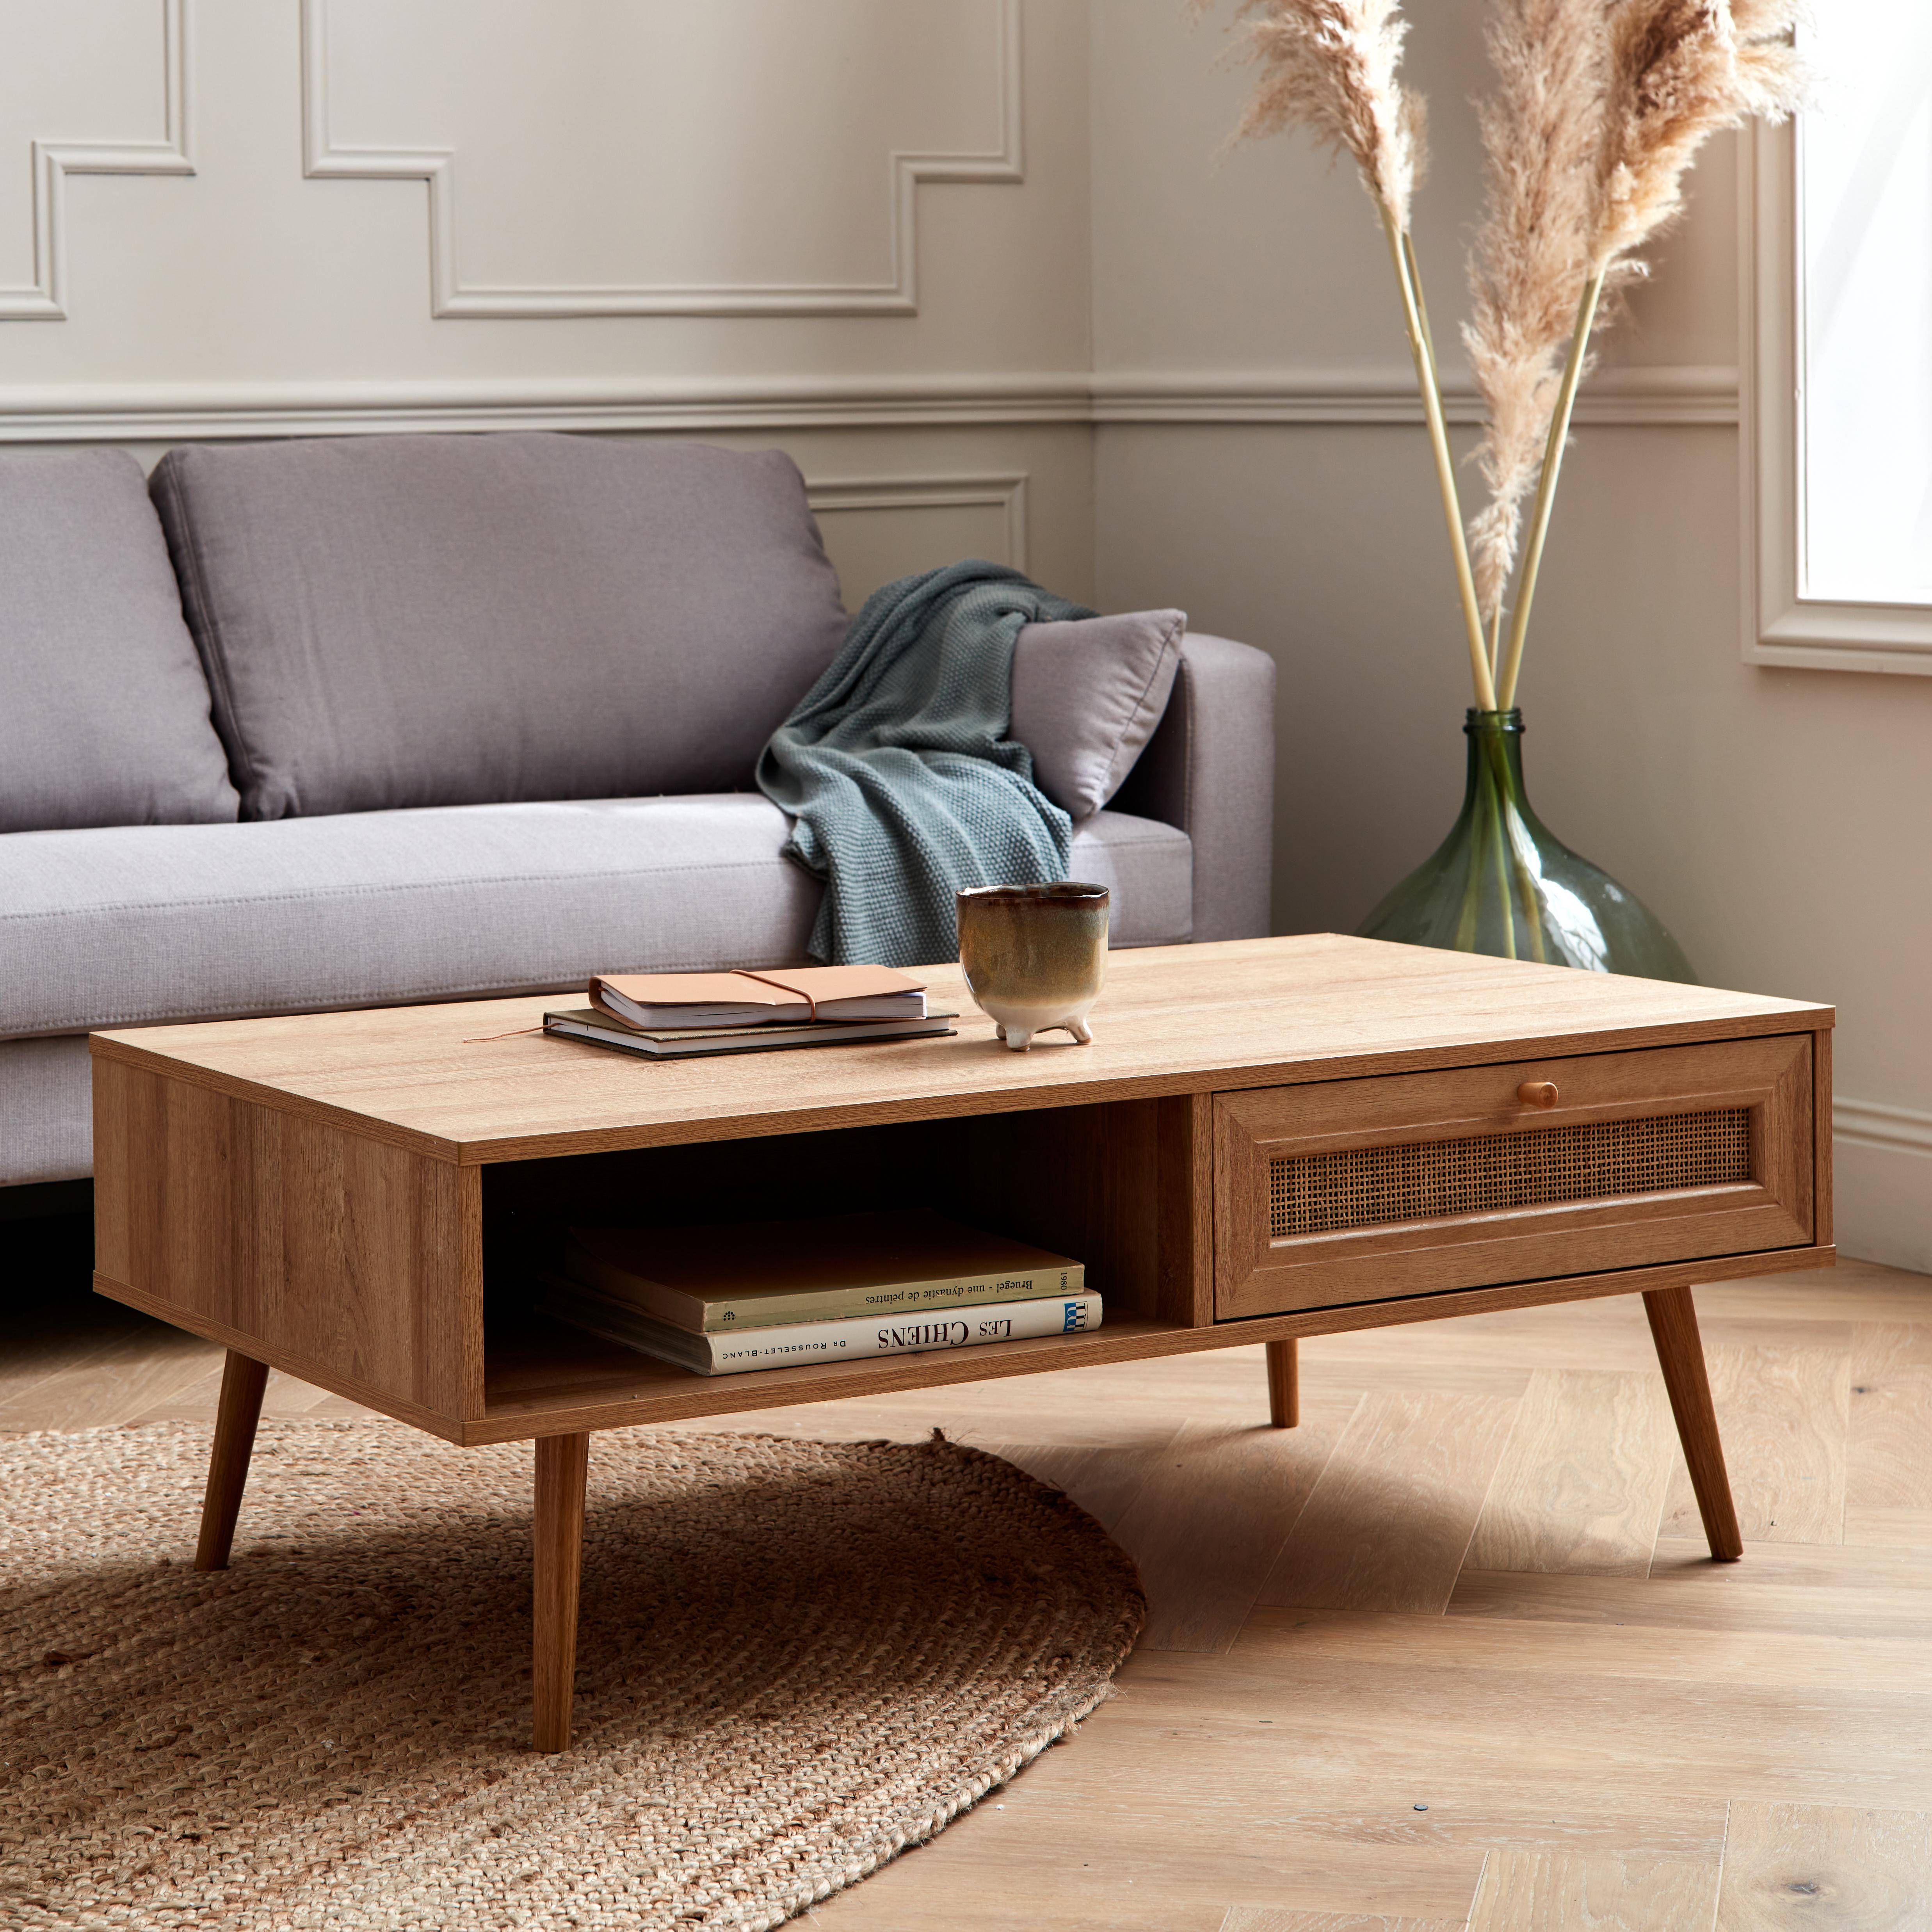 Wood and woven rattan coffee table with storage, 110x59x39cm, Natural, Boheme,sweeek,Photo1